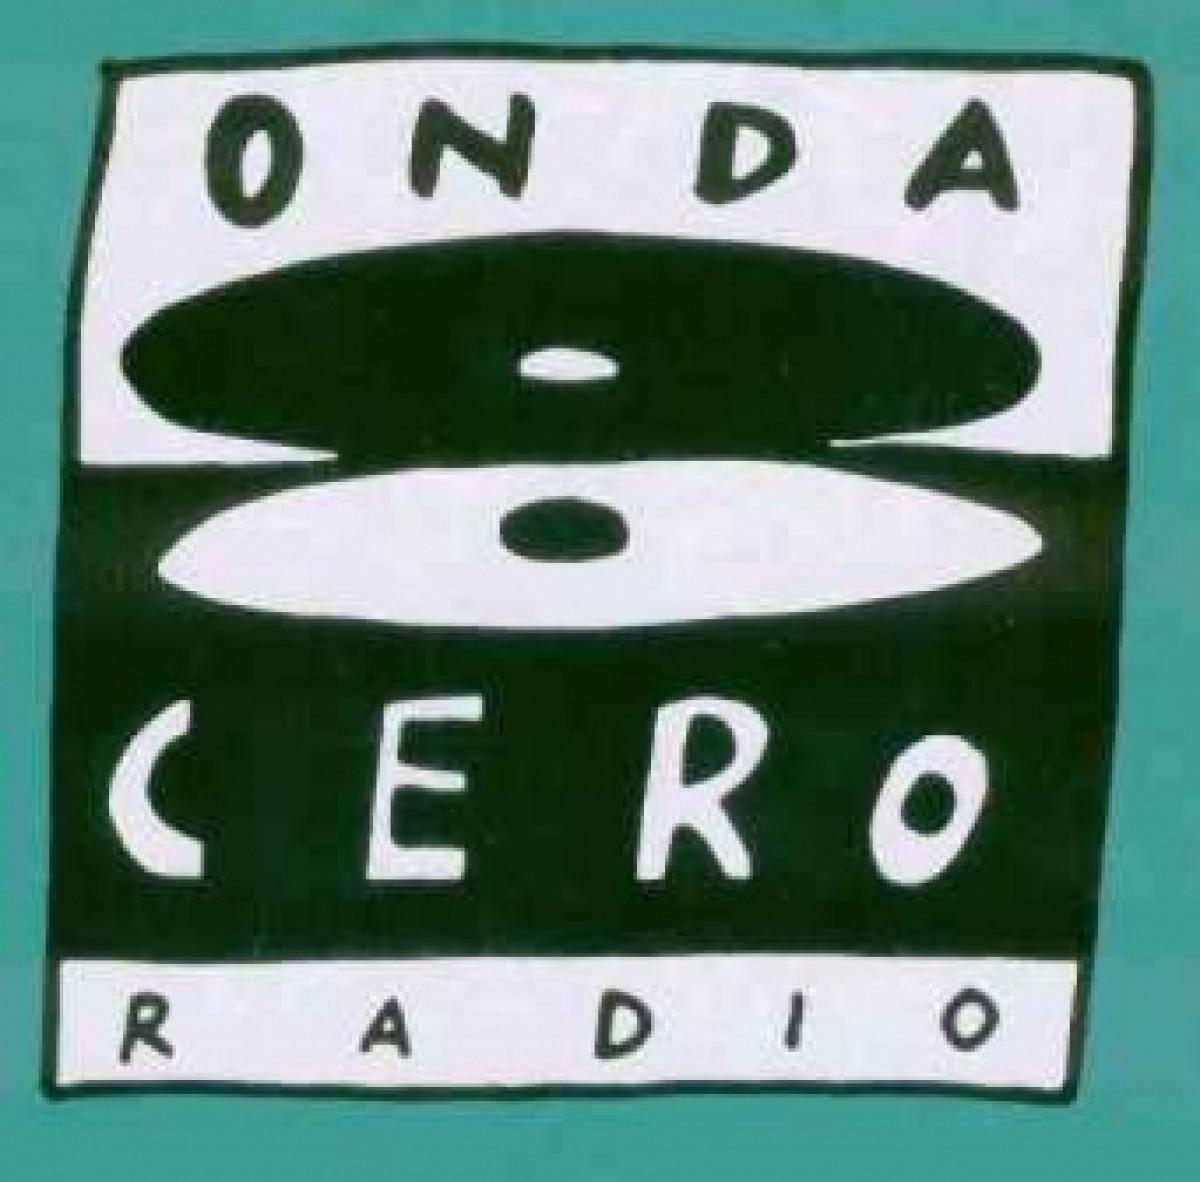 Logotipo de Onda Cero